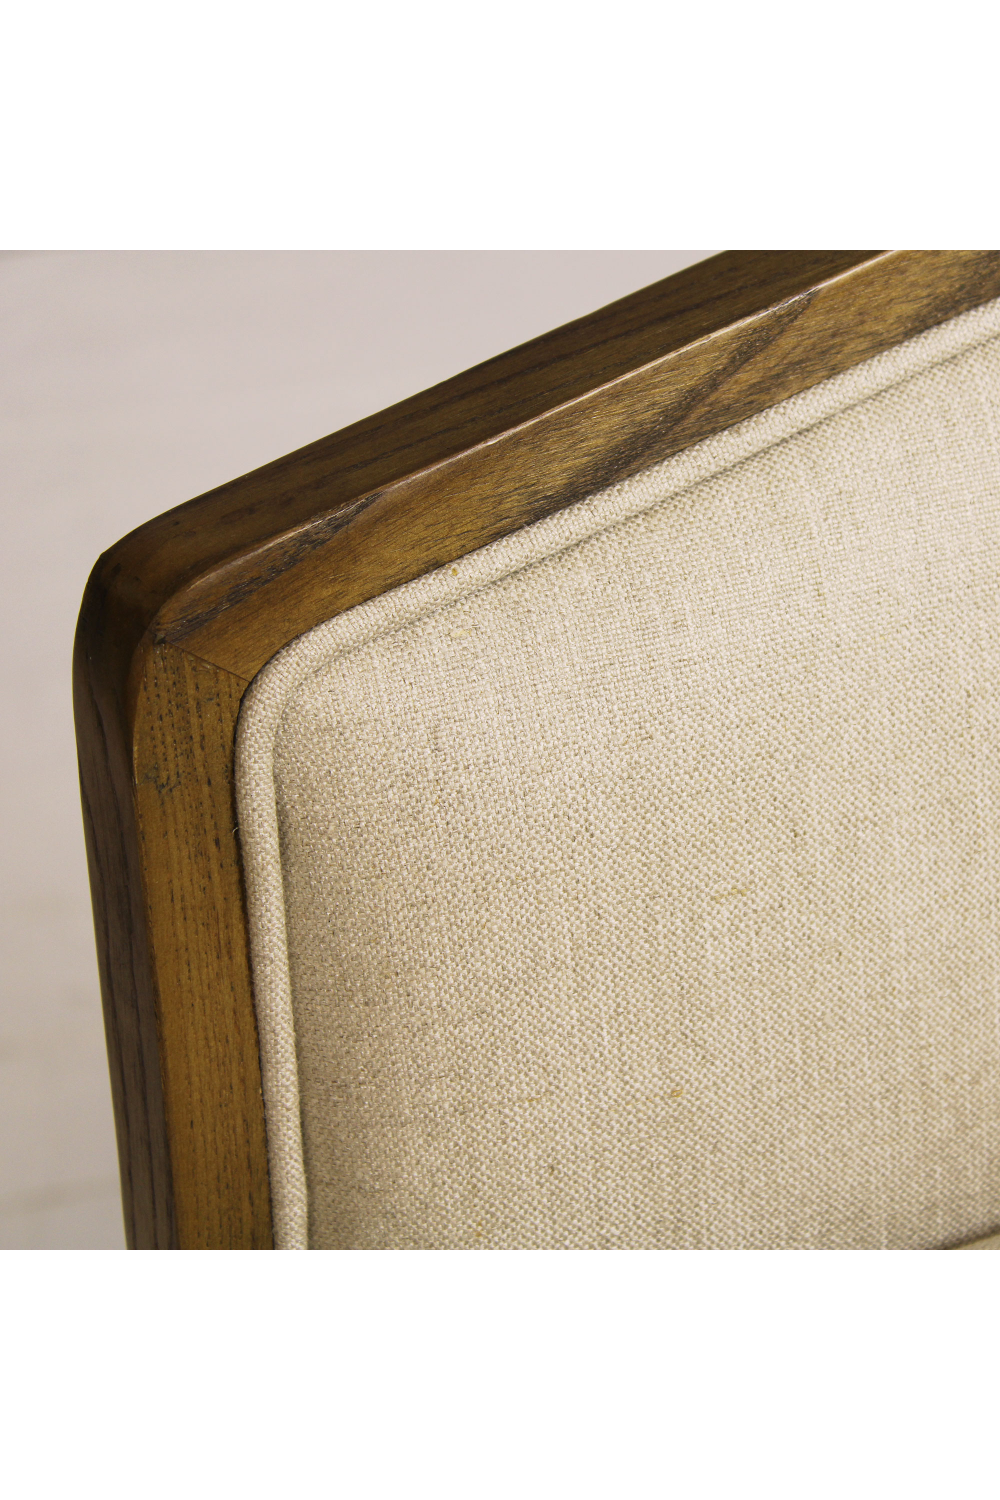 Mid-Century Upholstered Barrel Chair | Andrew Martin | OROA